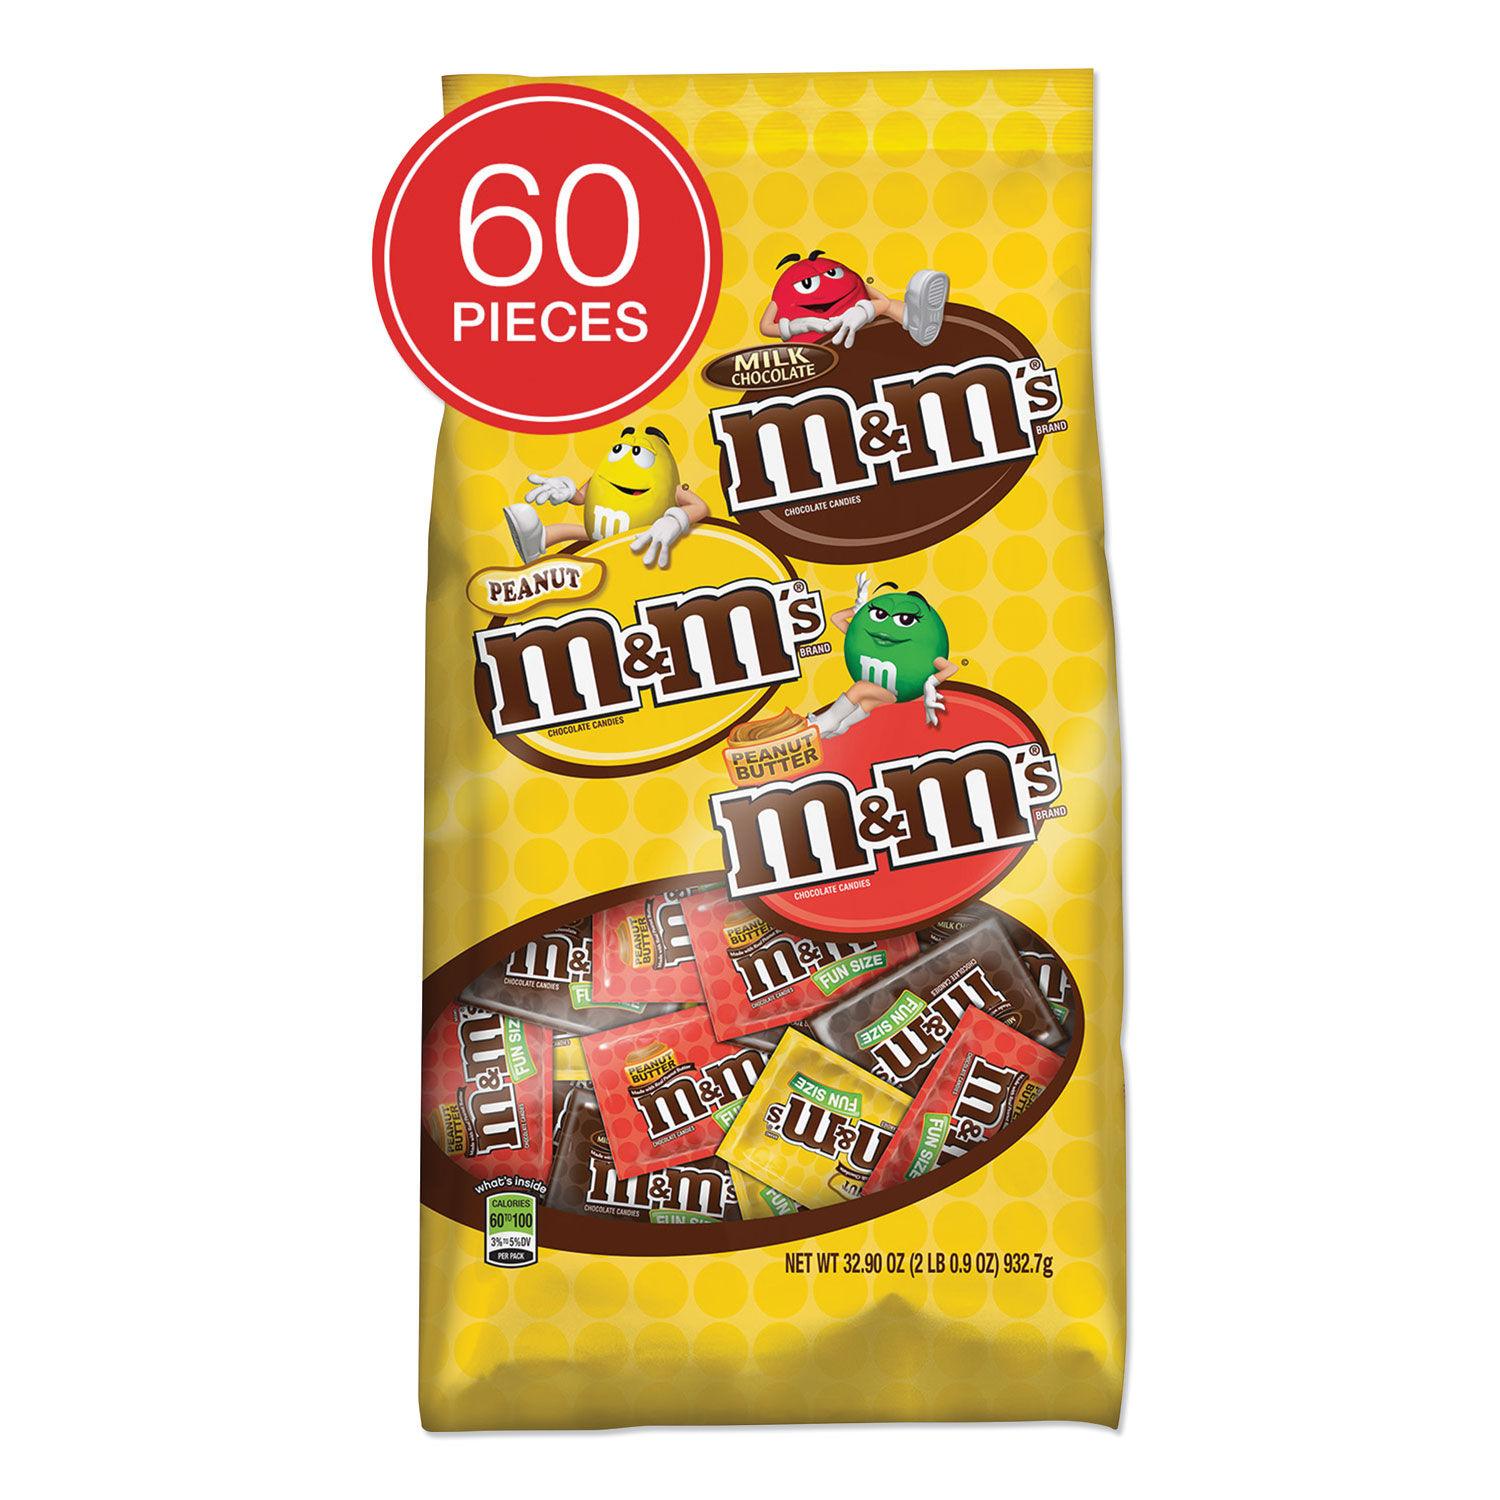 M&M's Peanut White Chocolate Candy, Sharing Size - 9.6 oz Bag